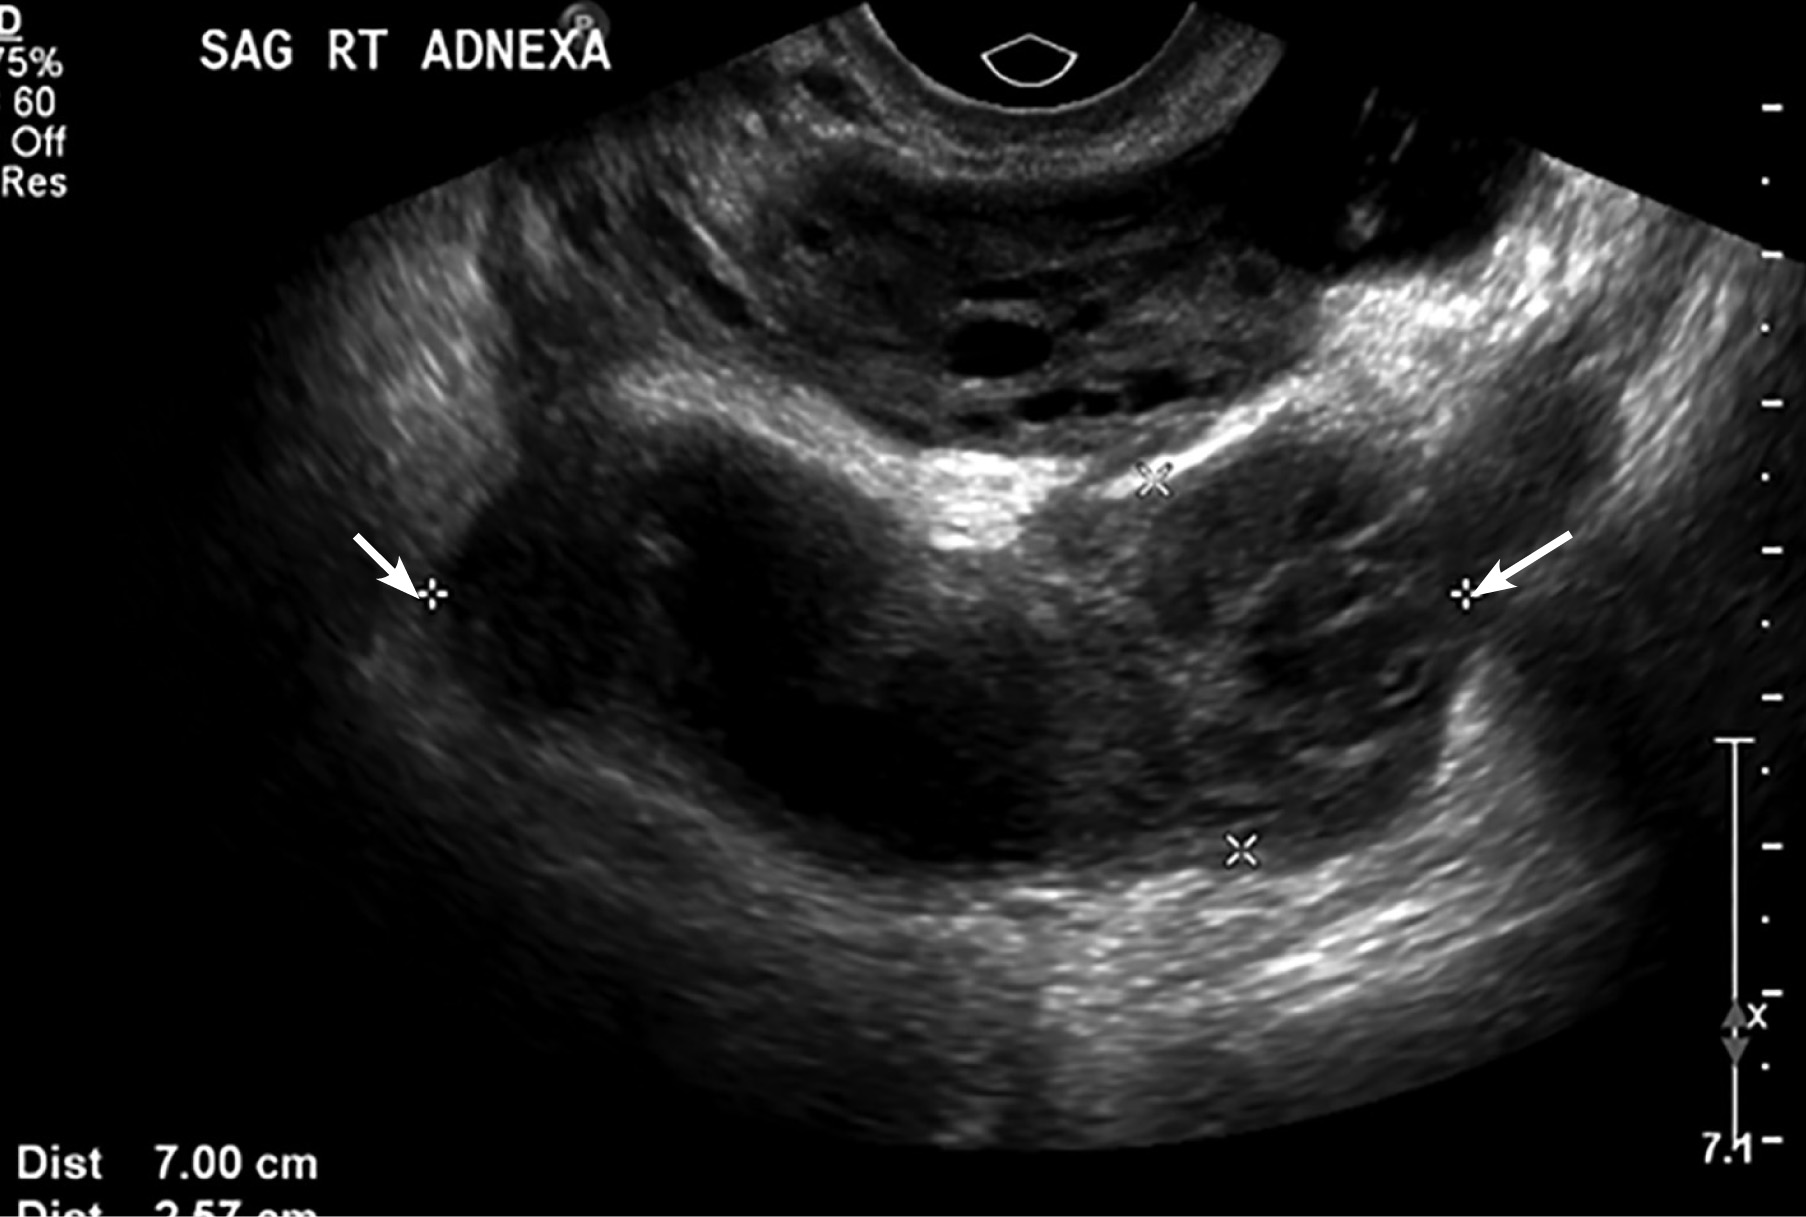 Ultrasound of right adnexa